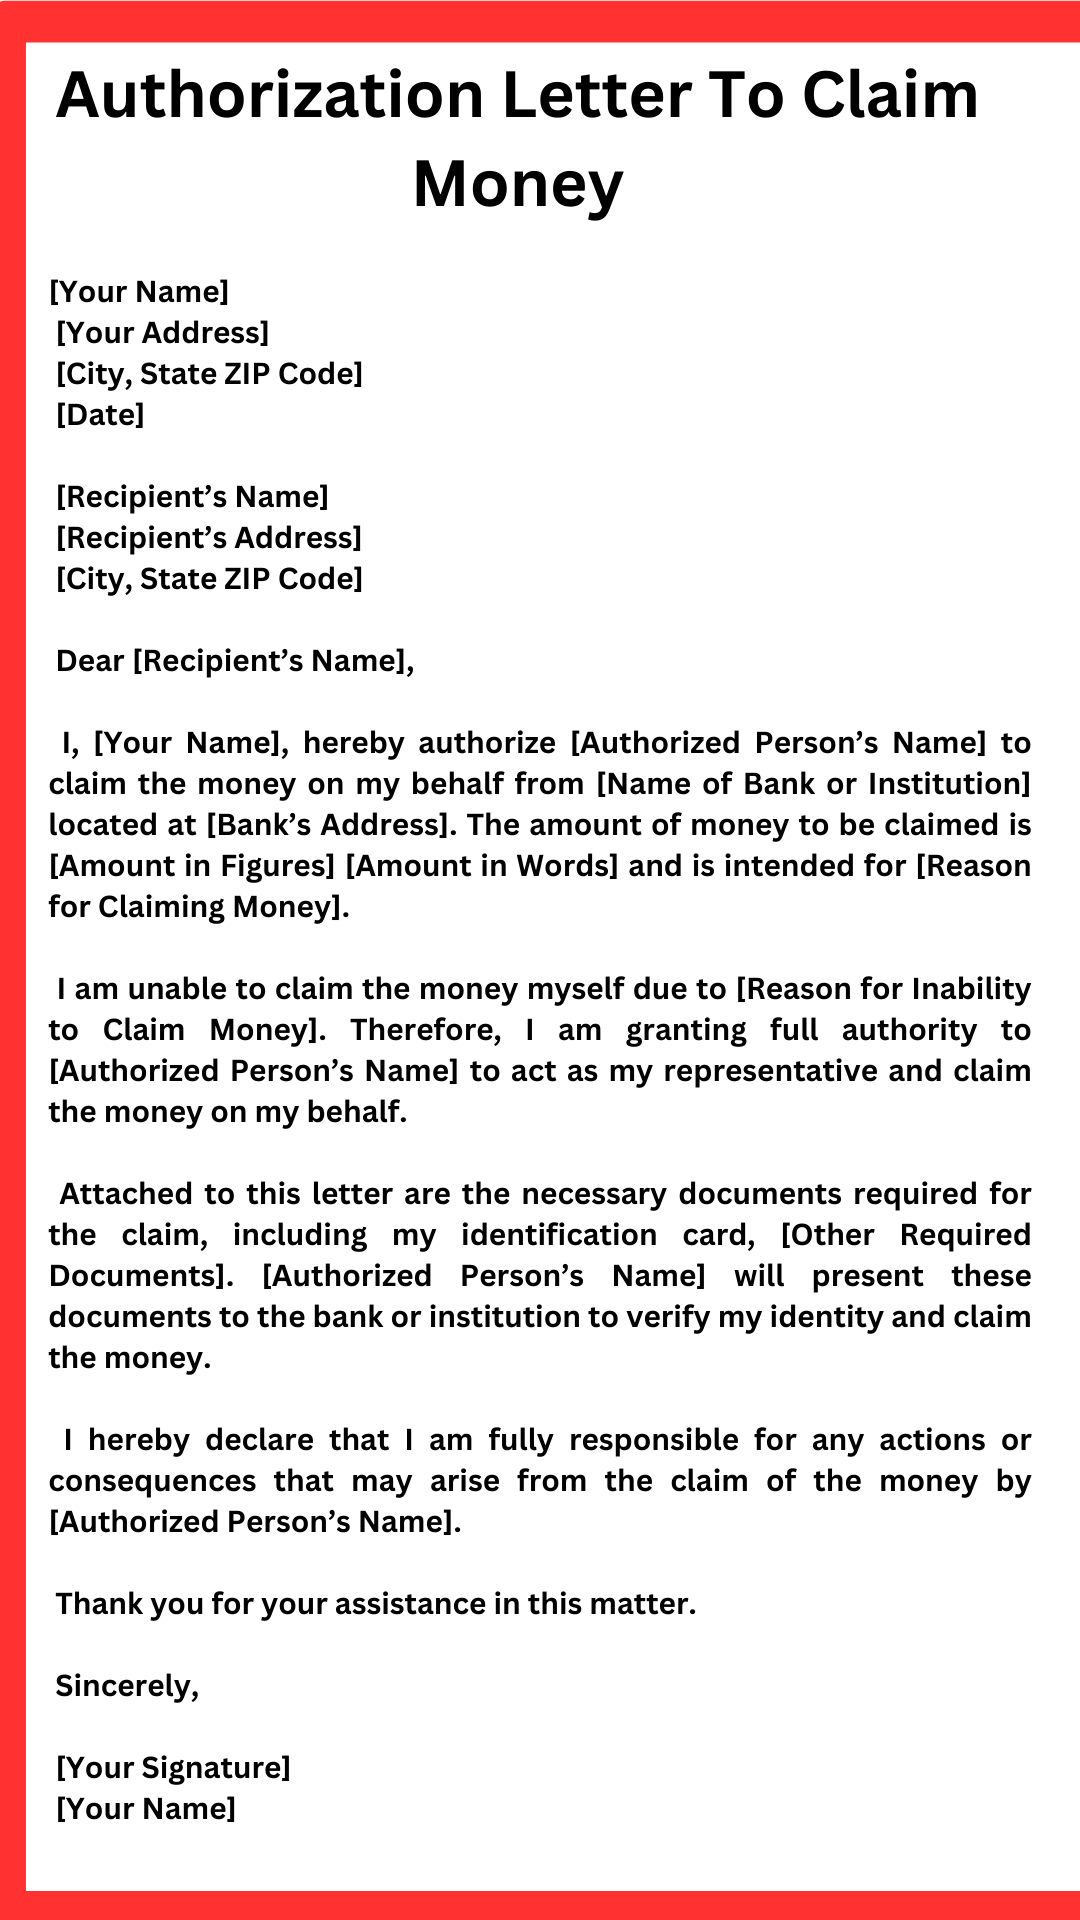 Authorization Letter To Claim Money